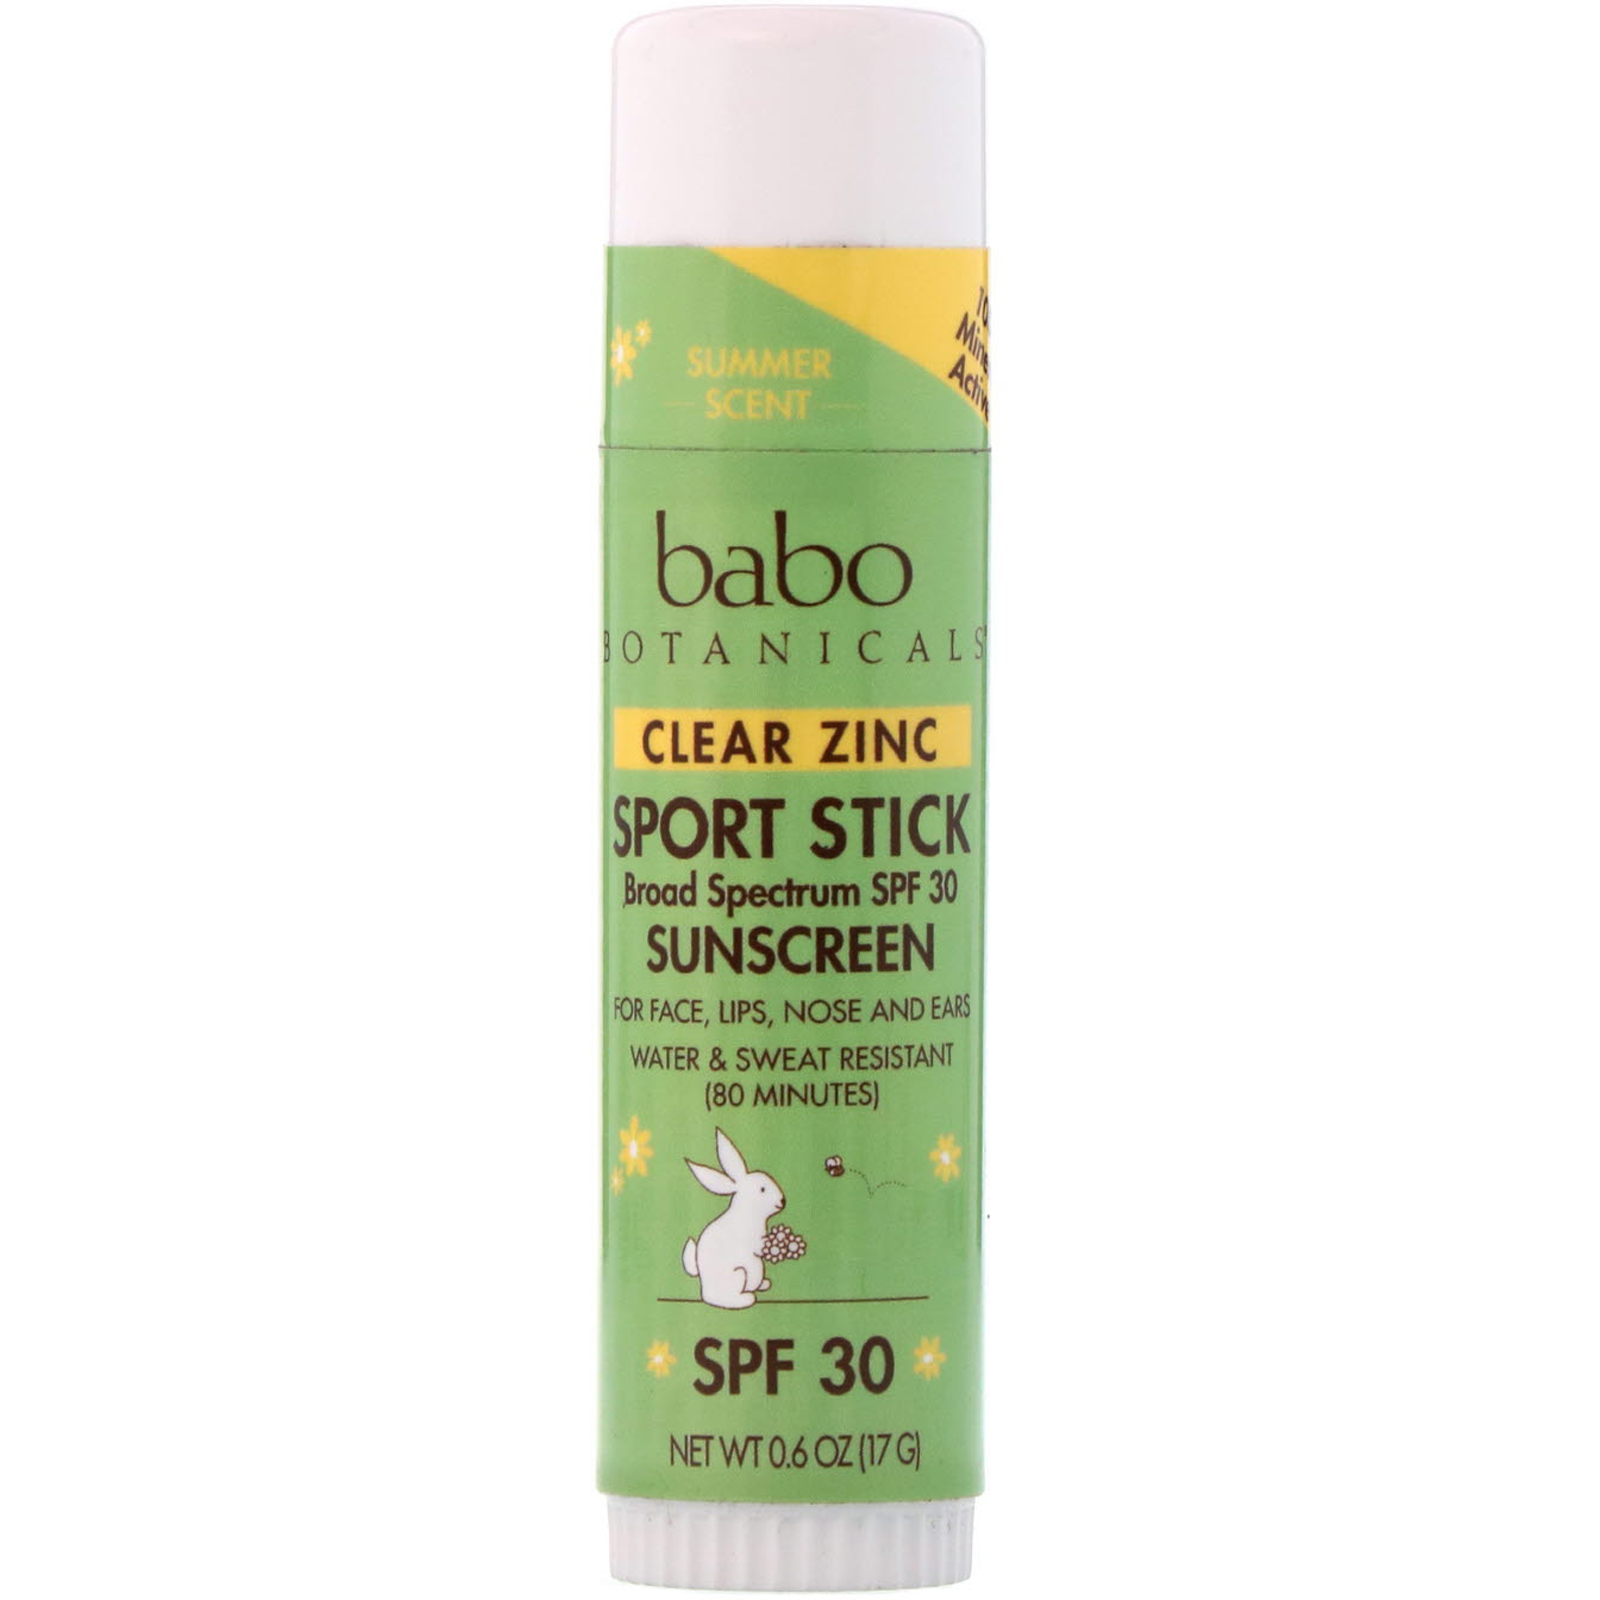 babo botanicals clear zinc